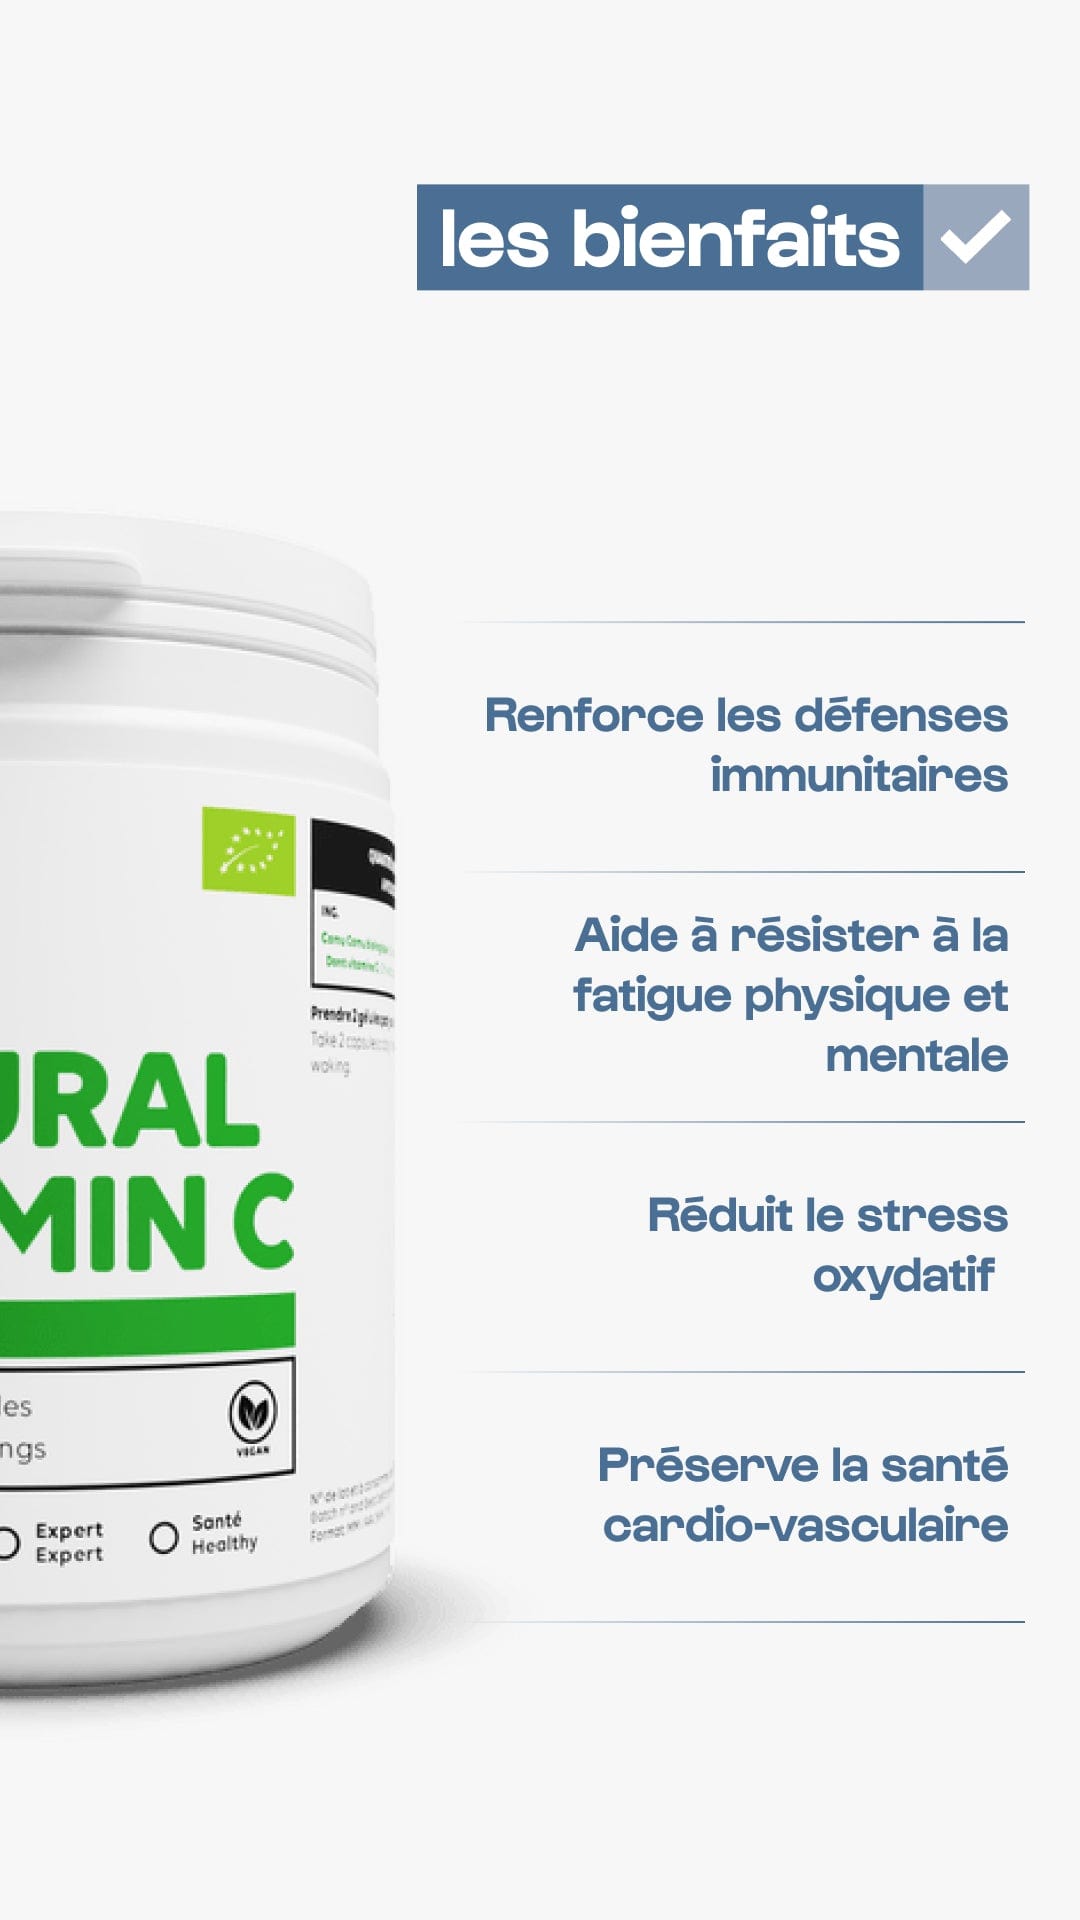 Nutrimuscle Vitamines 150 g Vitamine C Bio en poudre